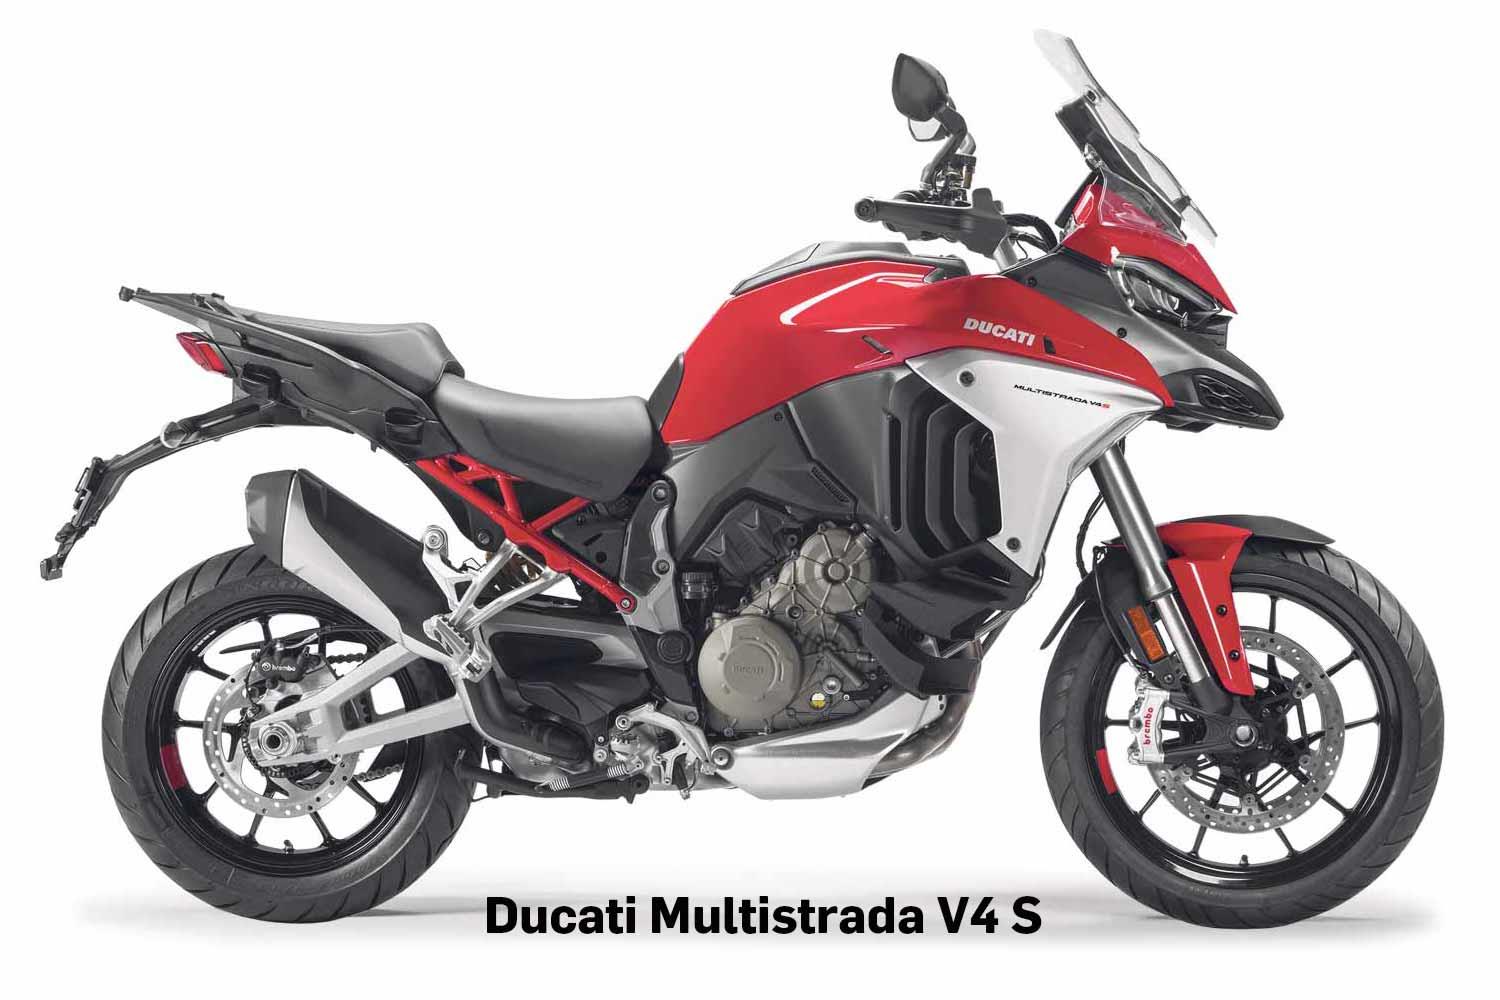 Ducati Multistrada V4 S long-term test